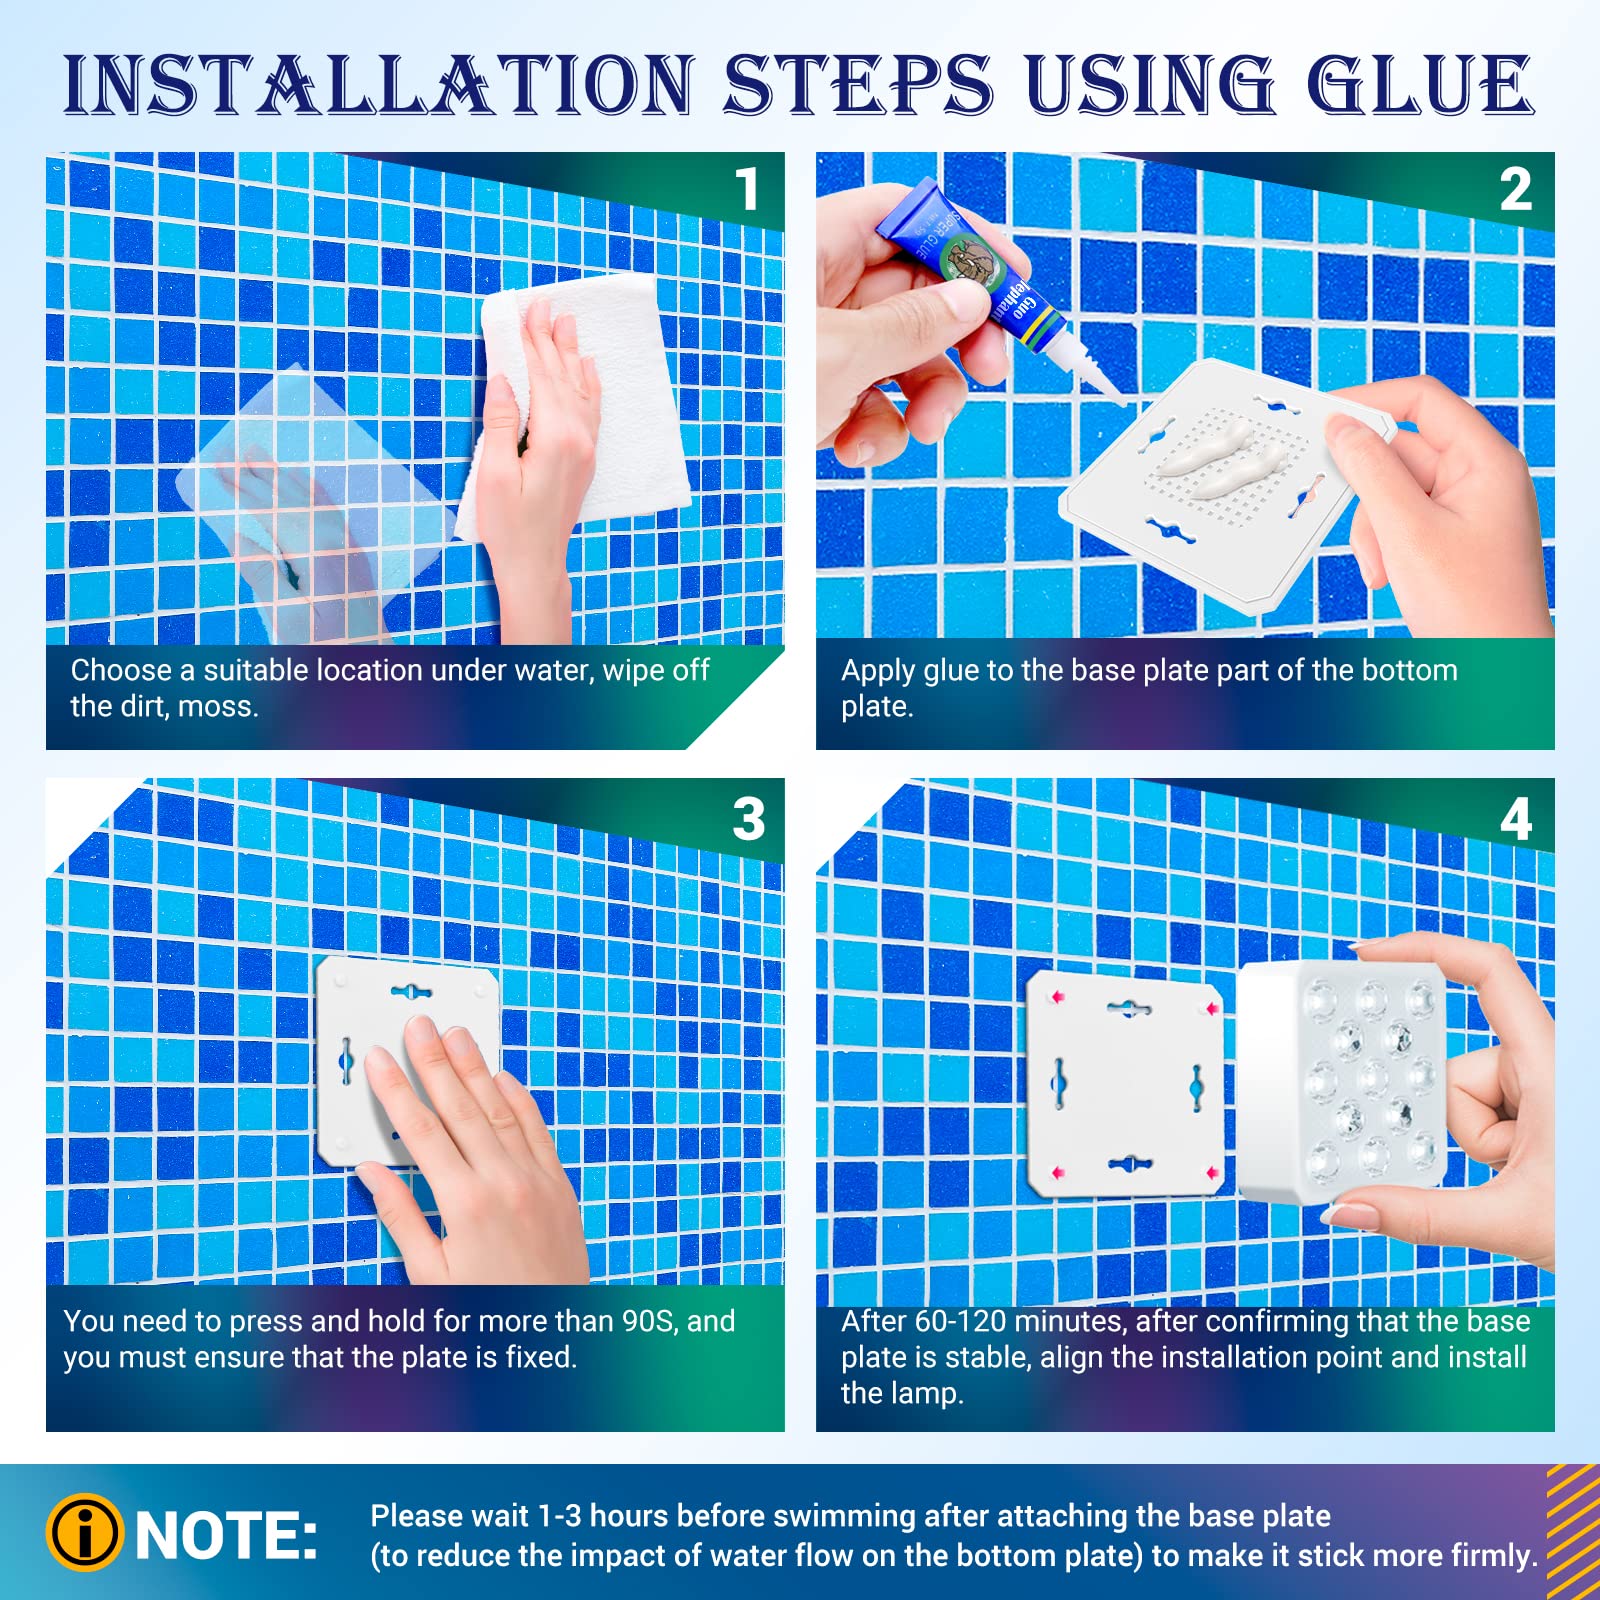 Green Glue Installation Overview